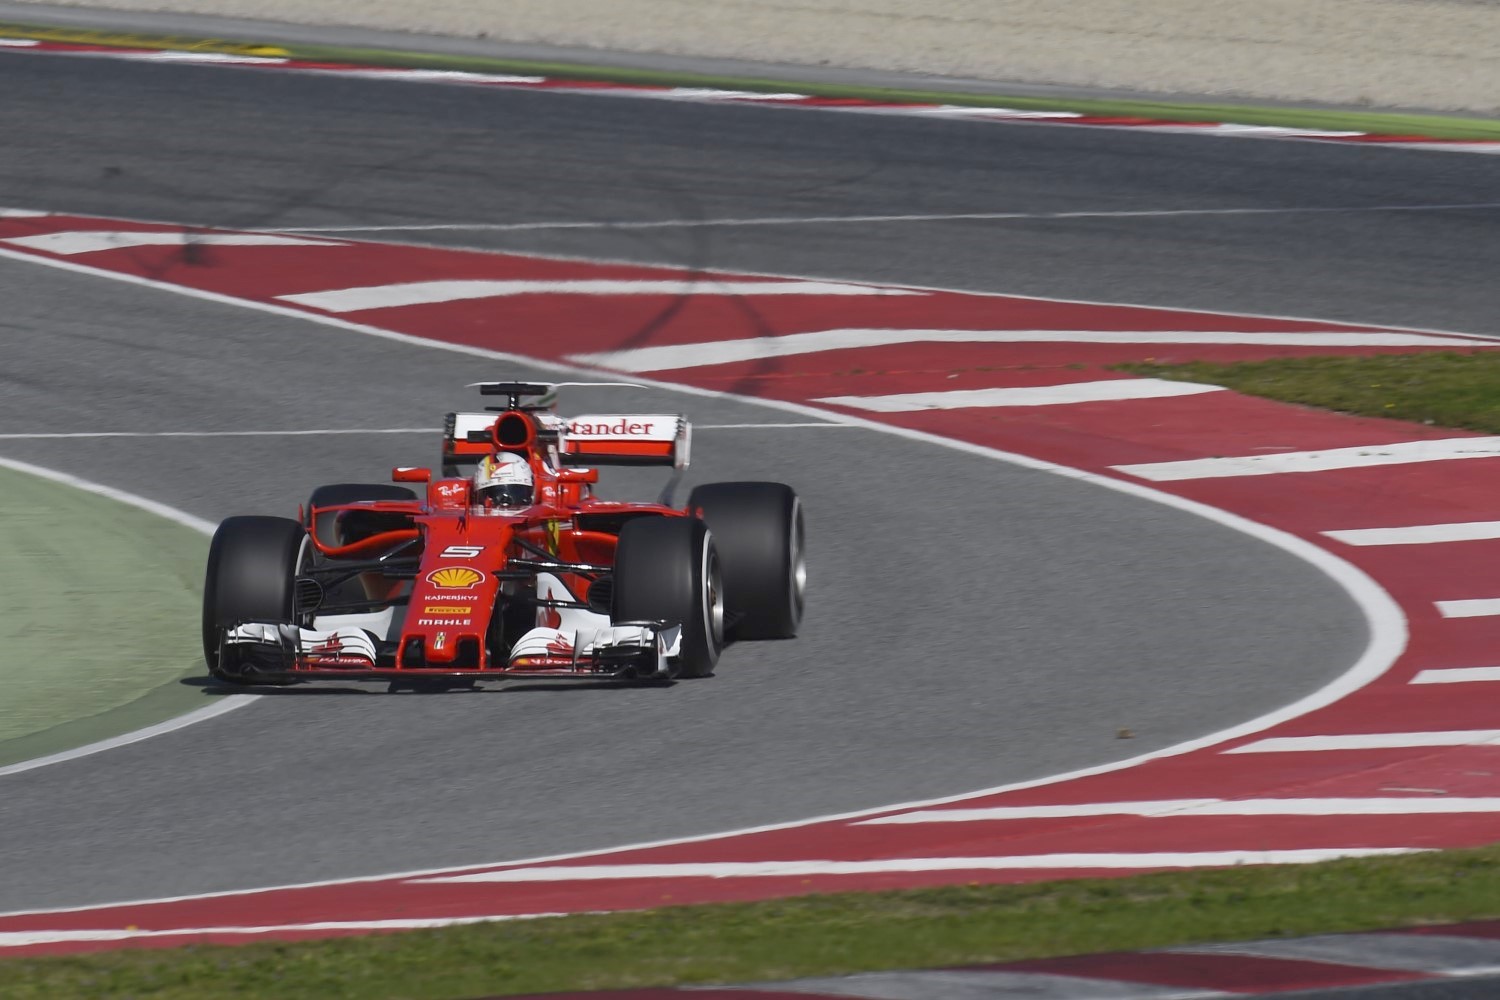 Vettel is sandbagging in the Ferrari, but how much is Mercedes sandbagging?